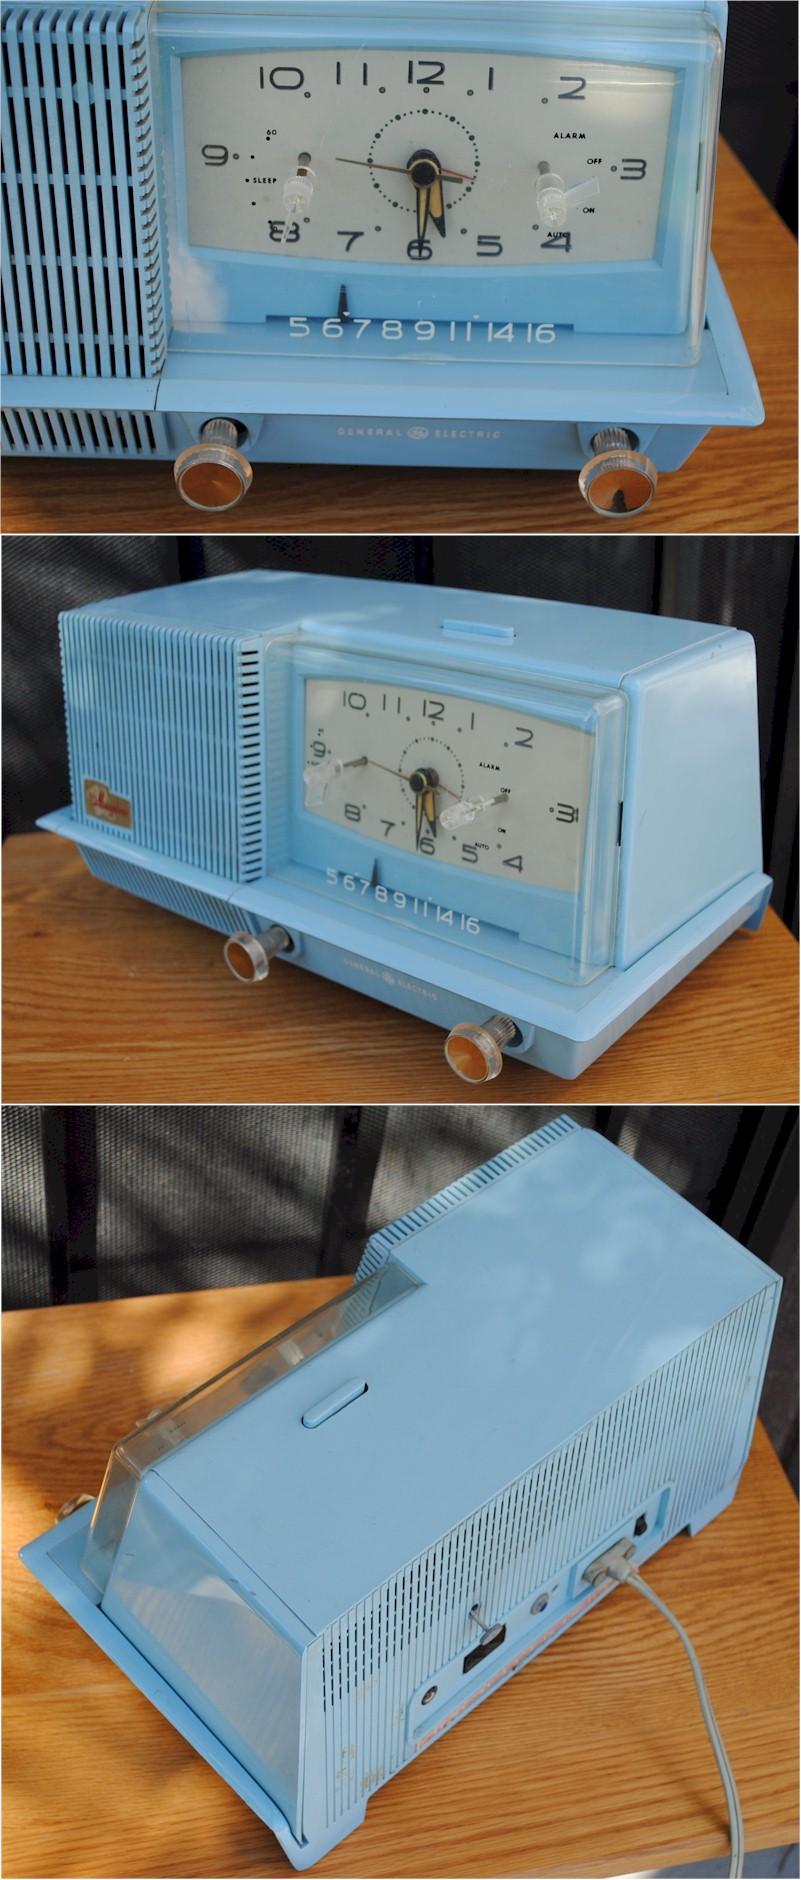 General Electric C-421A Clock Radio